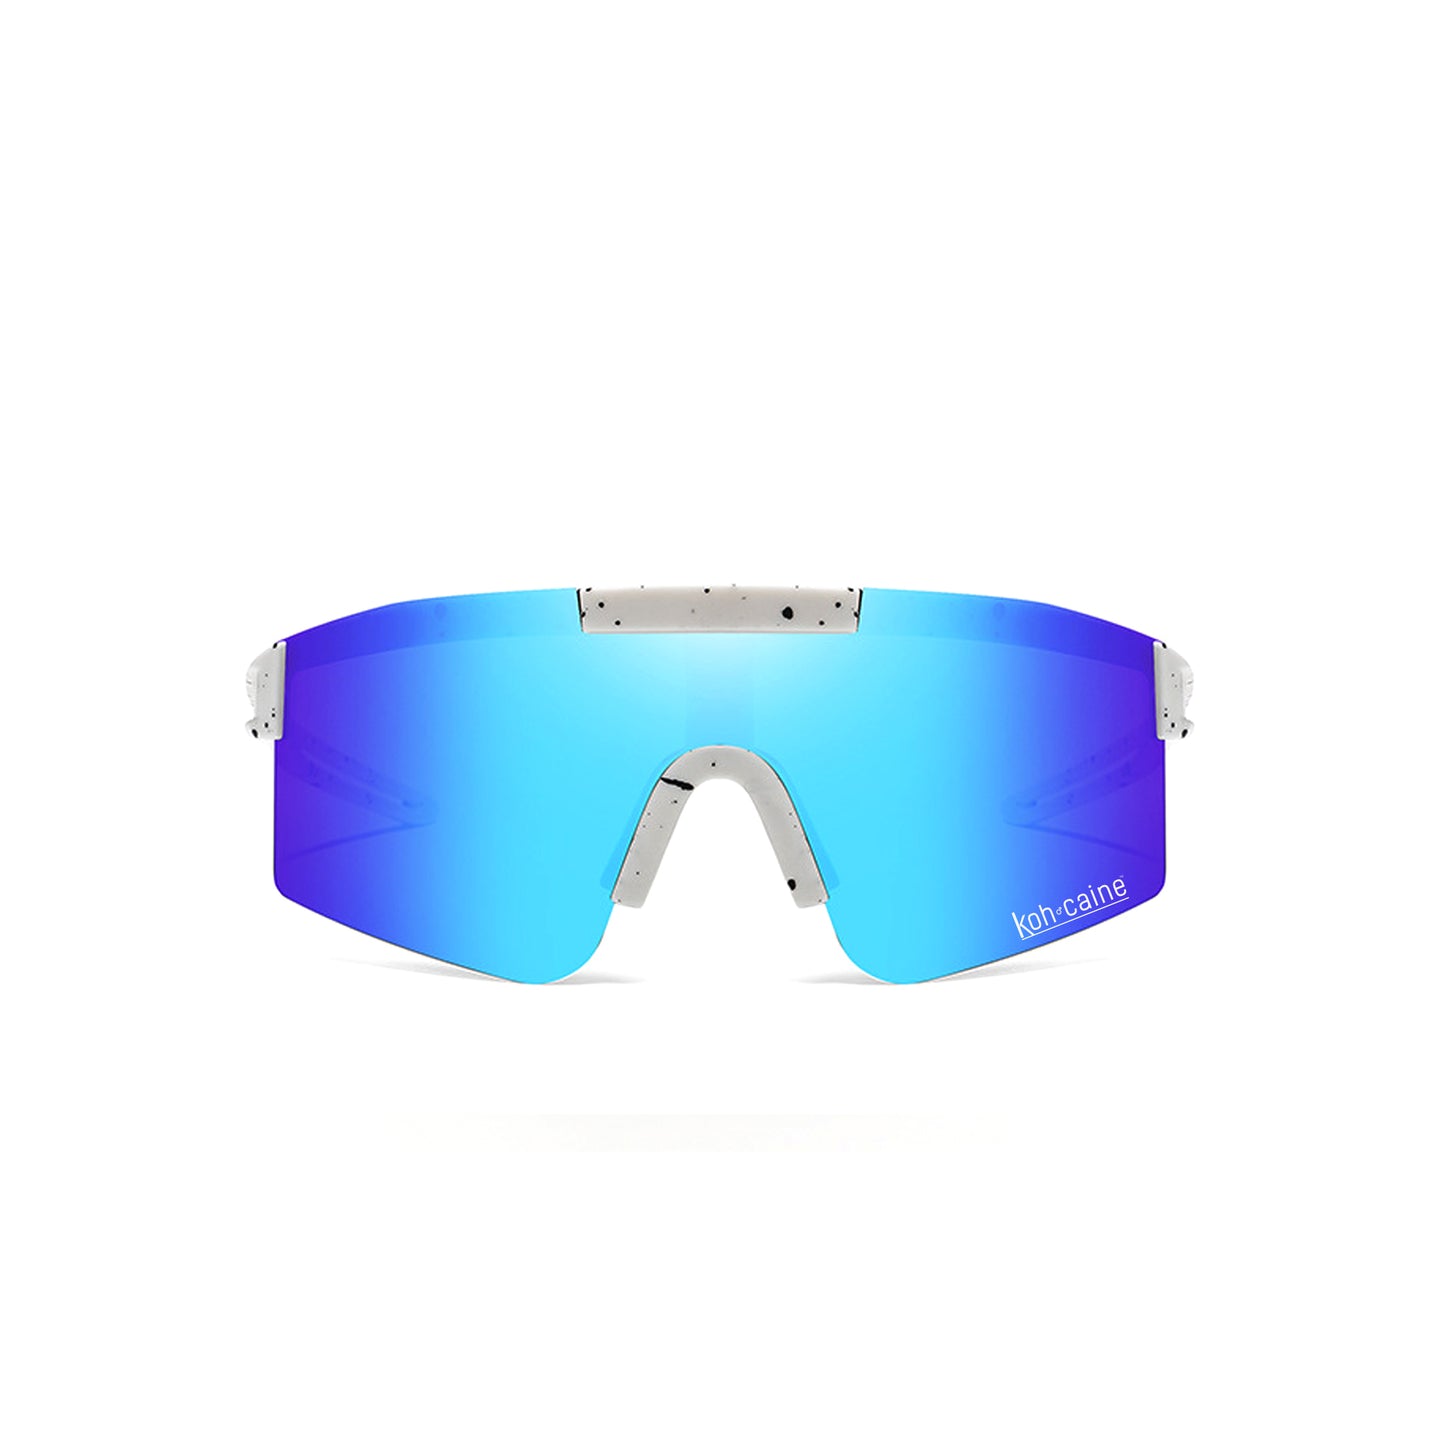 Kohcaine Sunglasses - Sport X